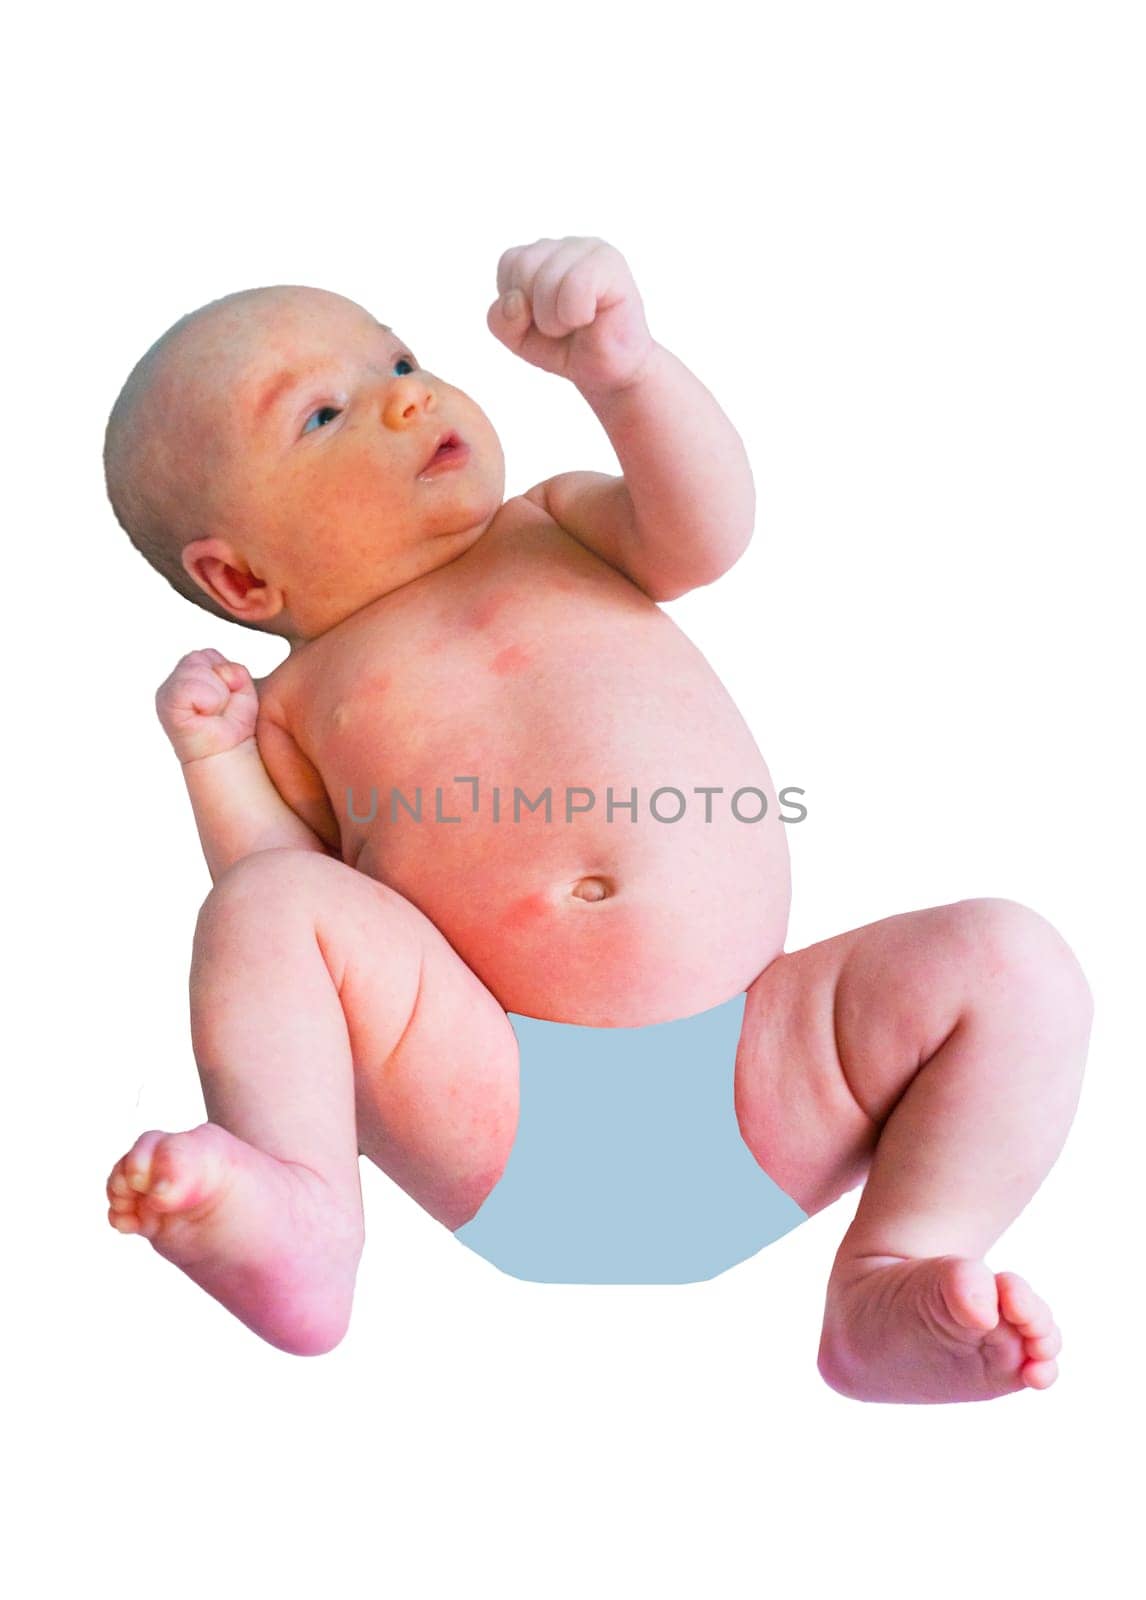 baby allergy skin food. child dermatitis symptom problem rash. miliaria, prickly by kajasja